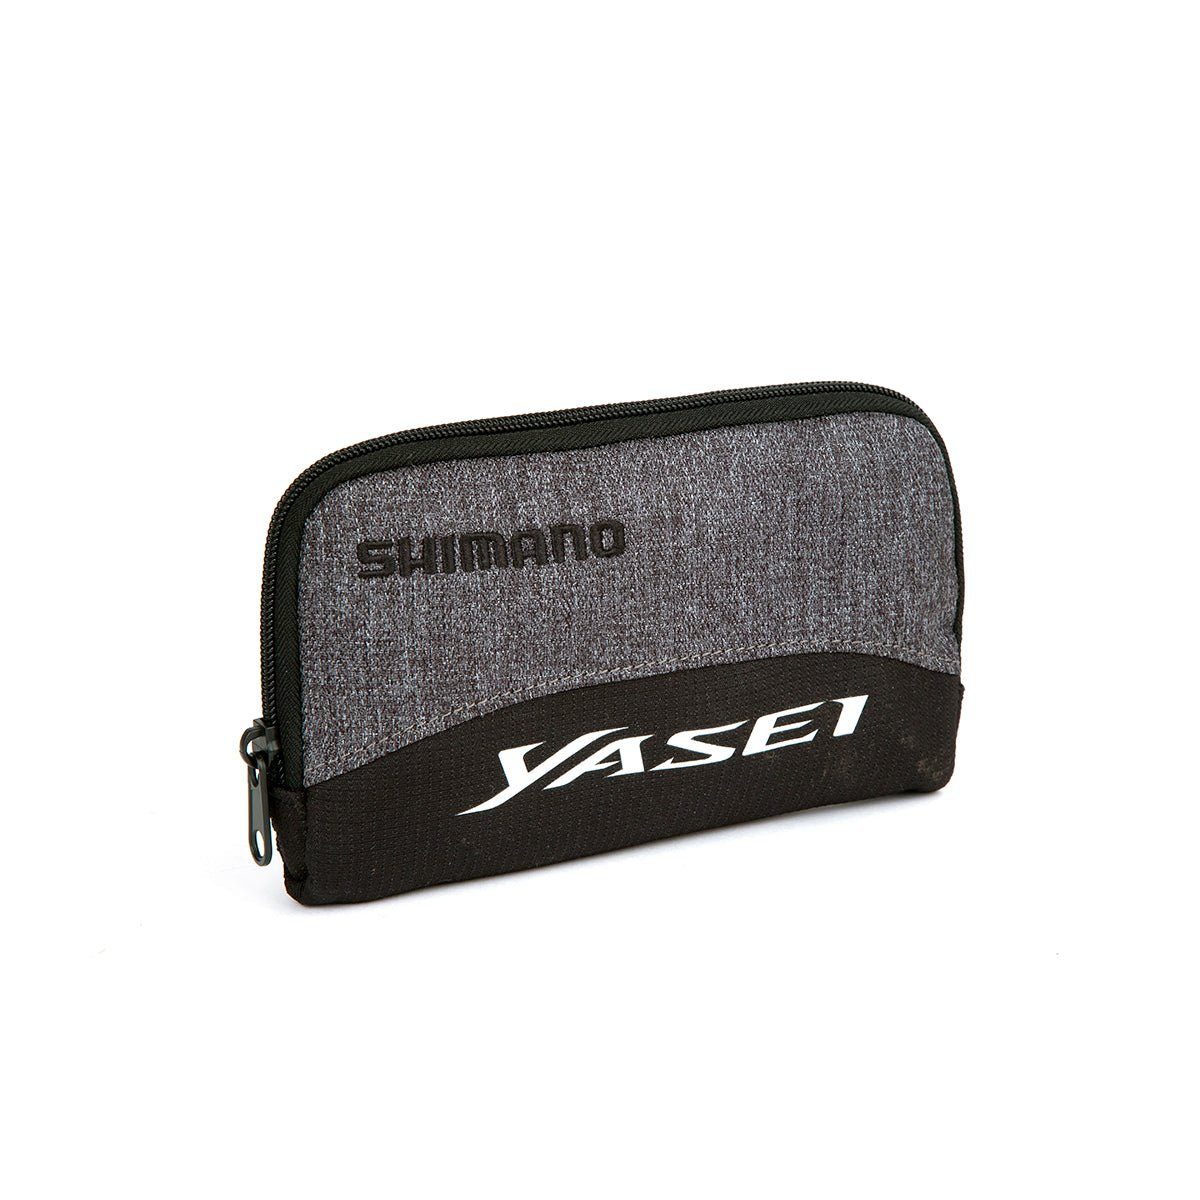 Light Yasei Sync Shimano Zusatztasche Lure Case Angelkoffer / Luggage Shimano